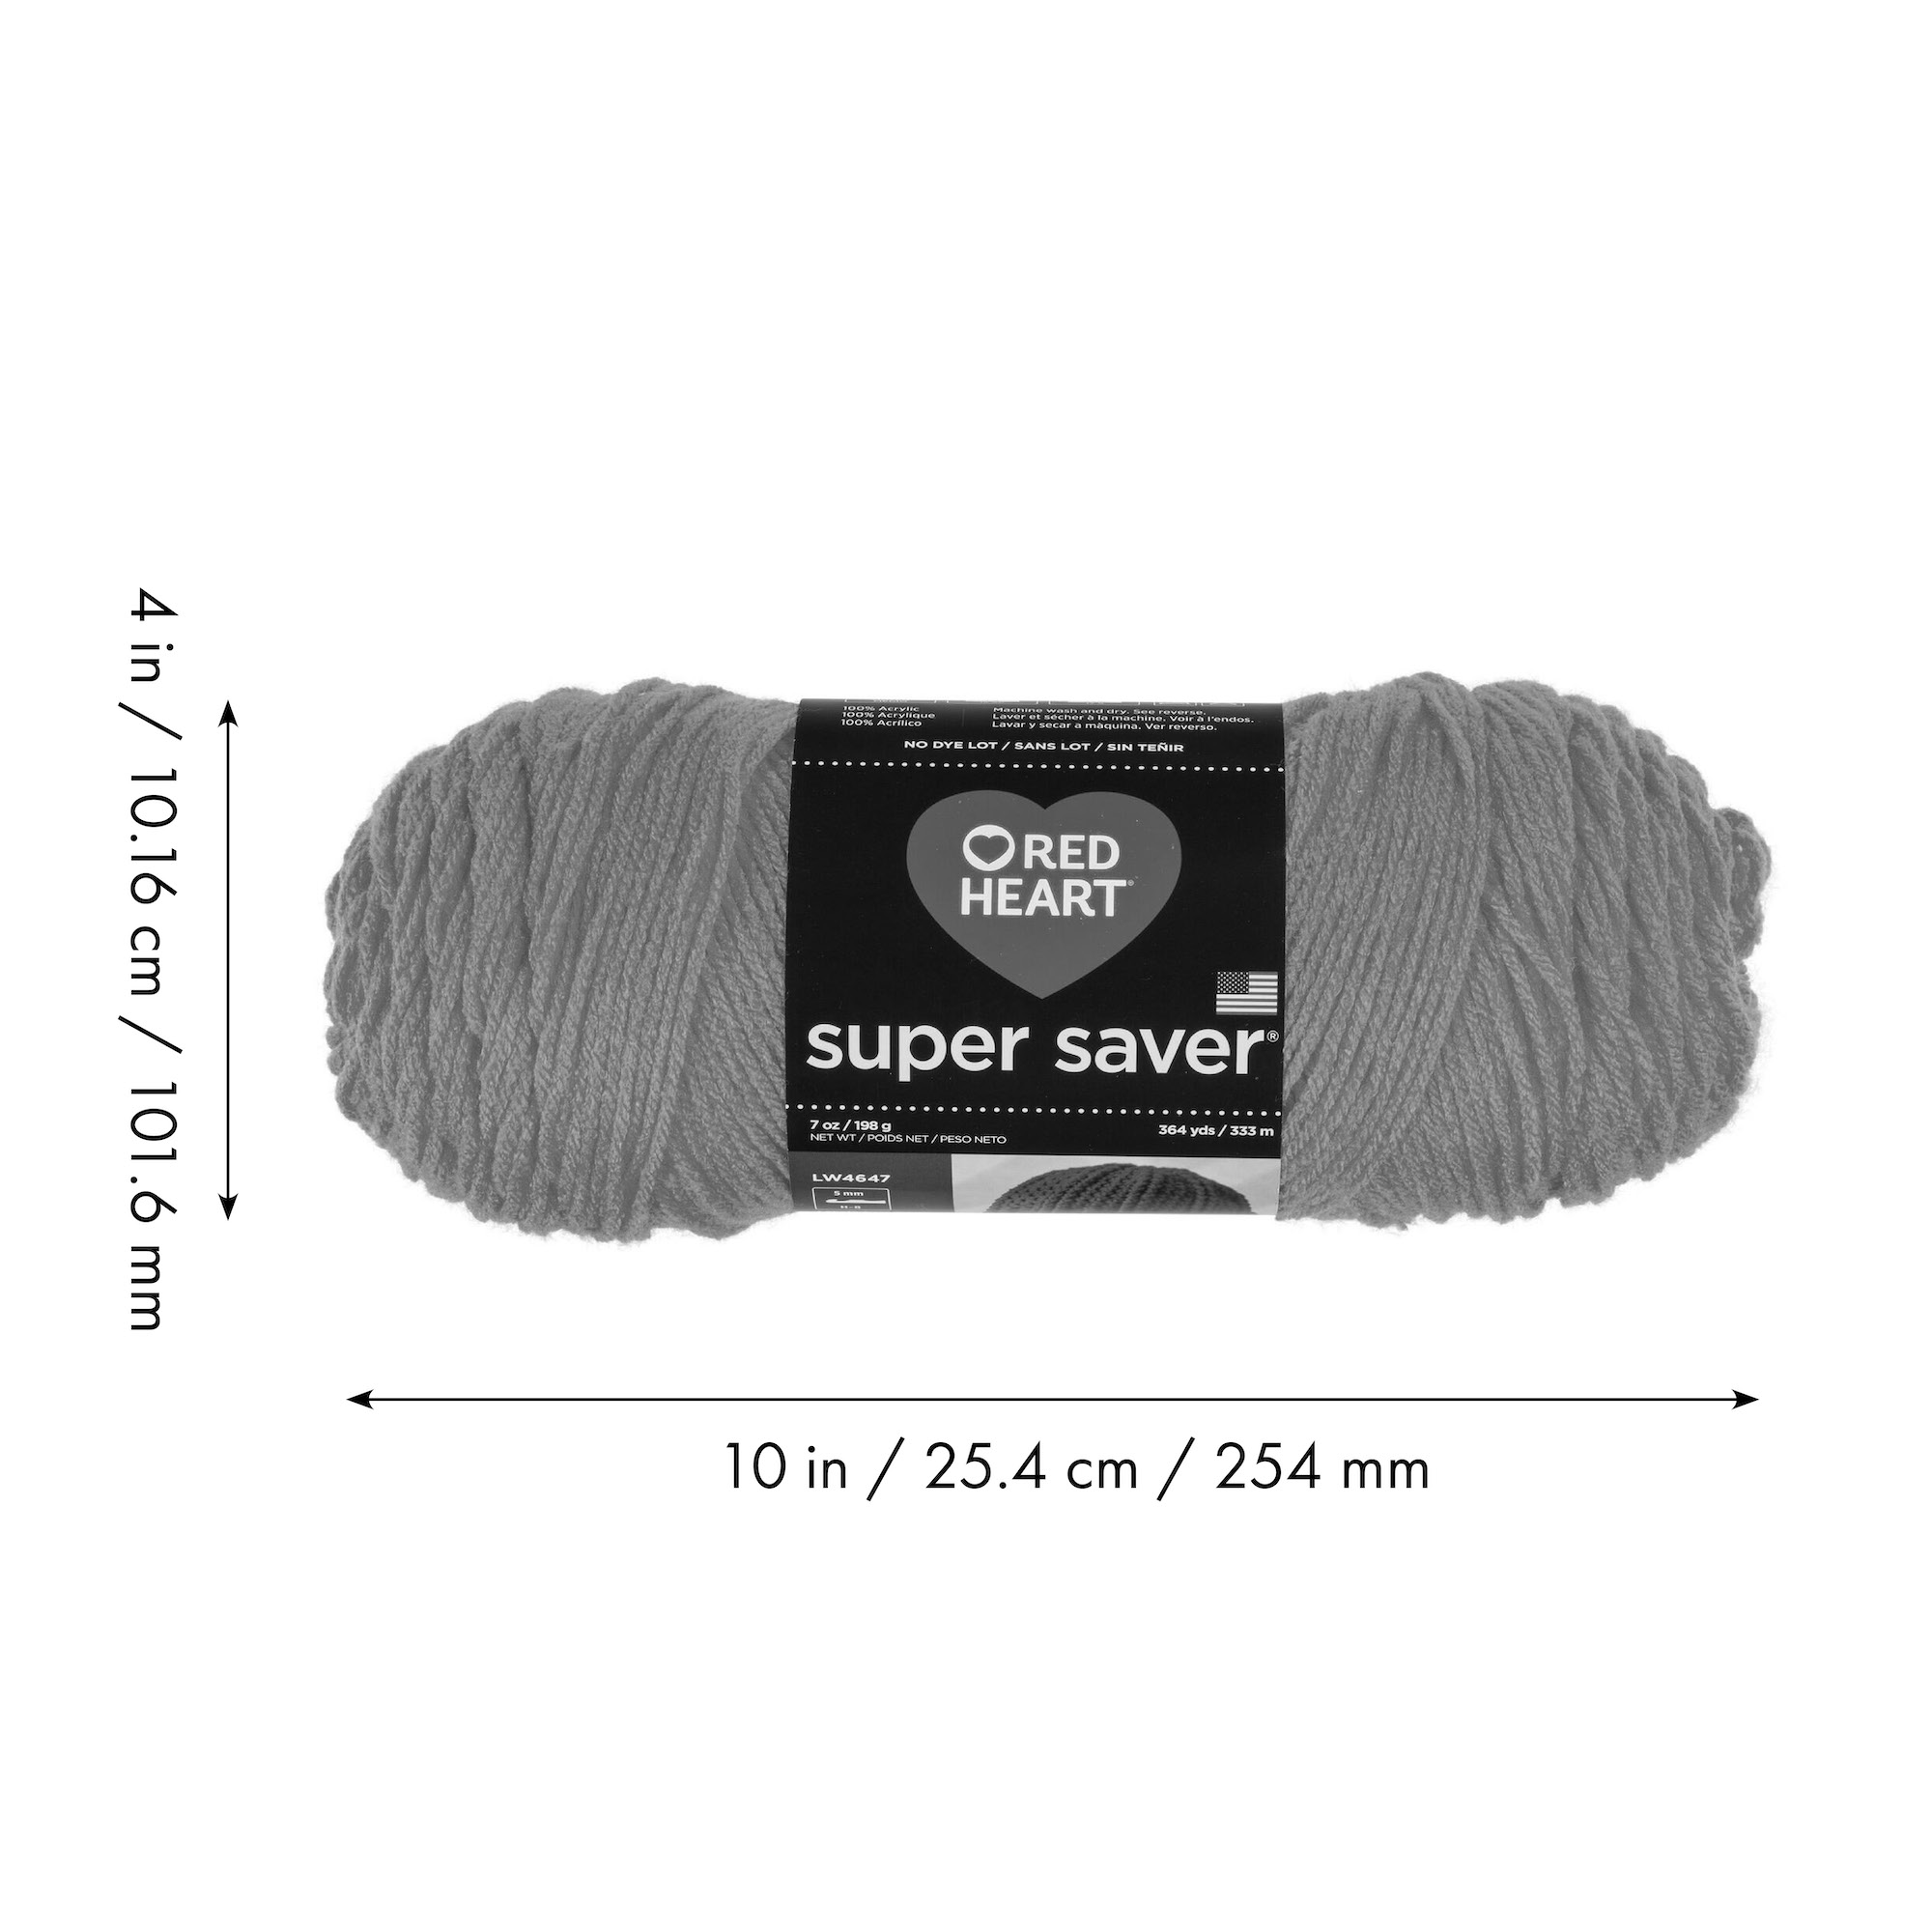 Red Heart Super Saver® 4 Medium Acrylic Yarn, Mulberry 7oz/198g, 364 Yards - image 5 of 12